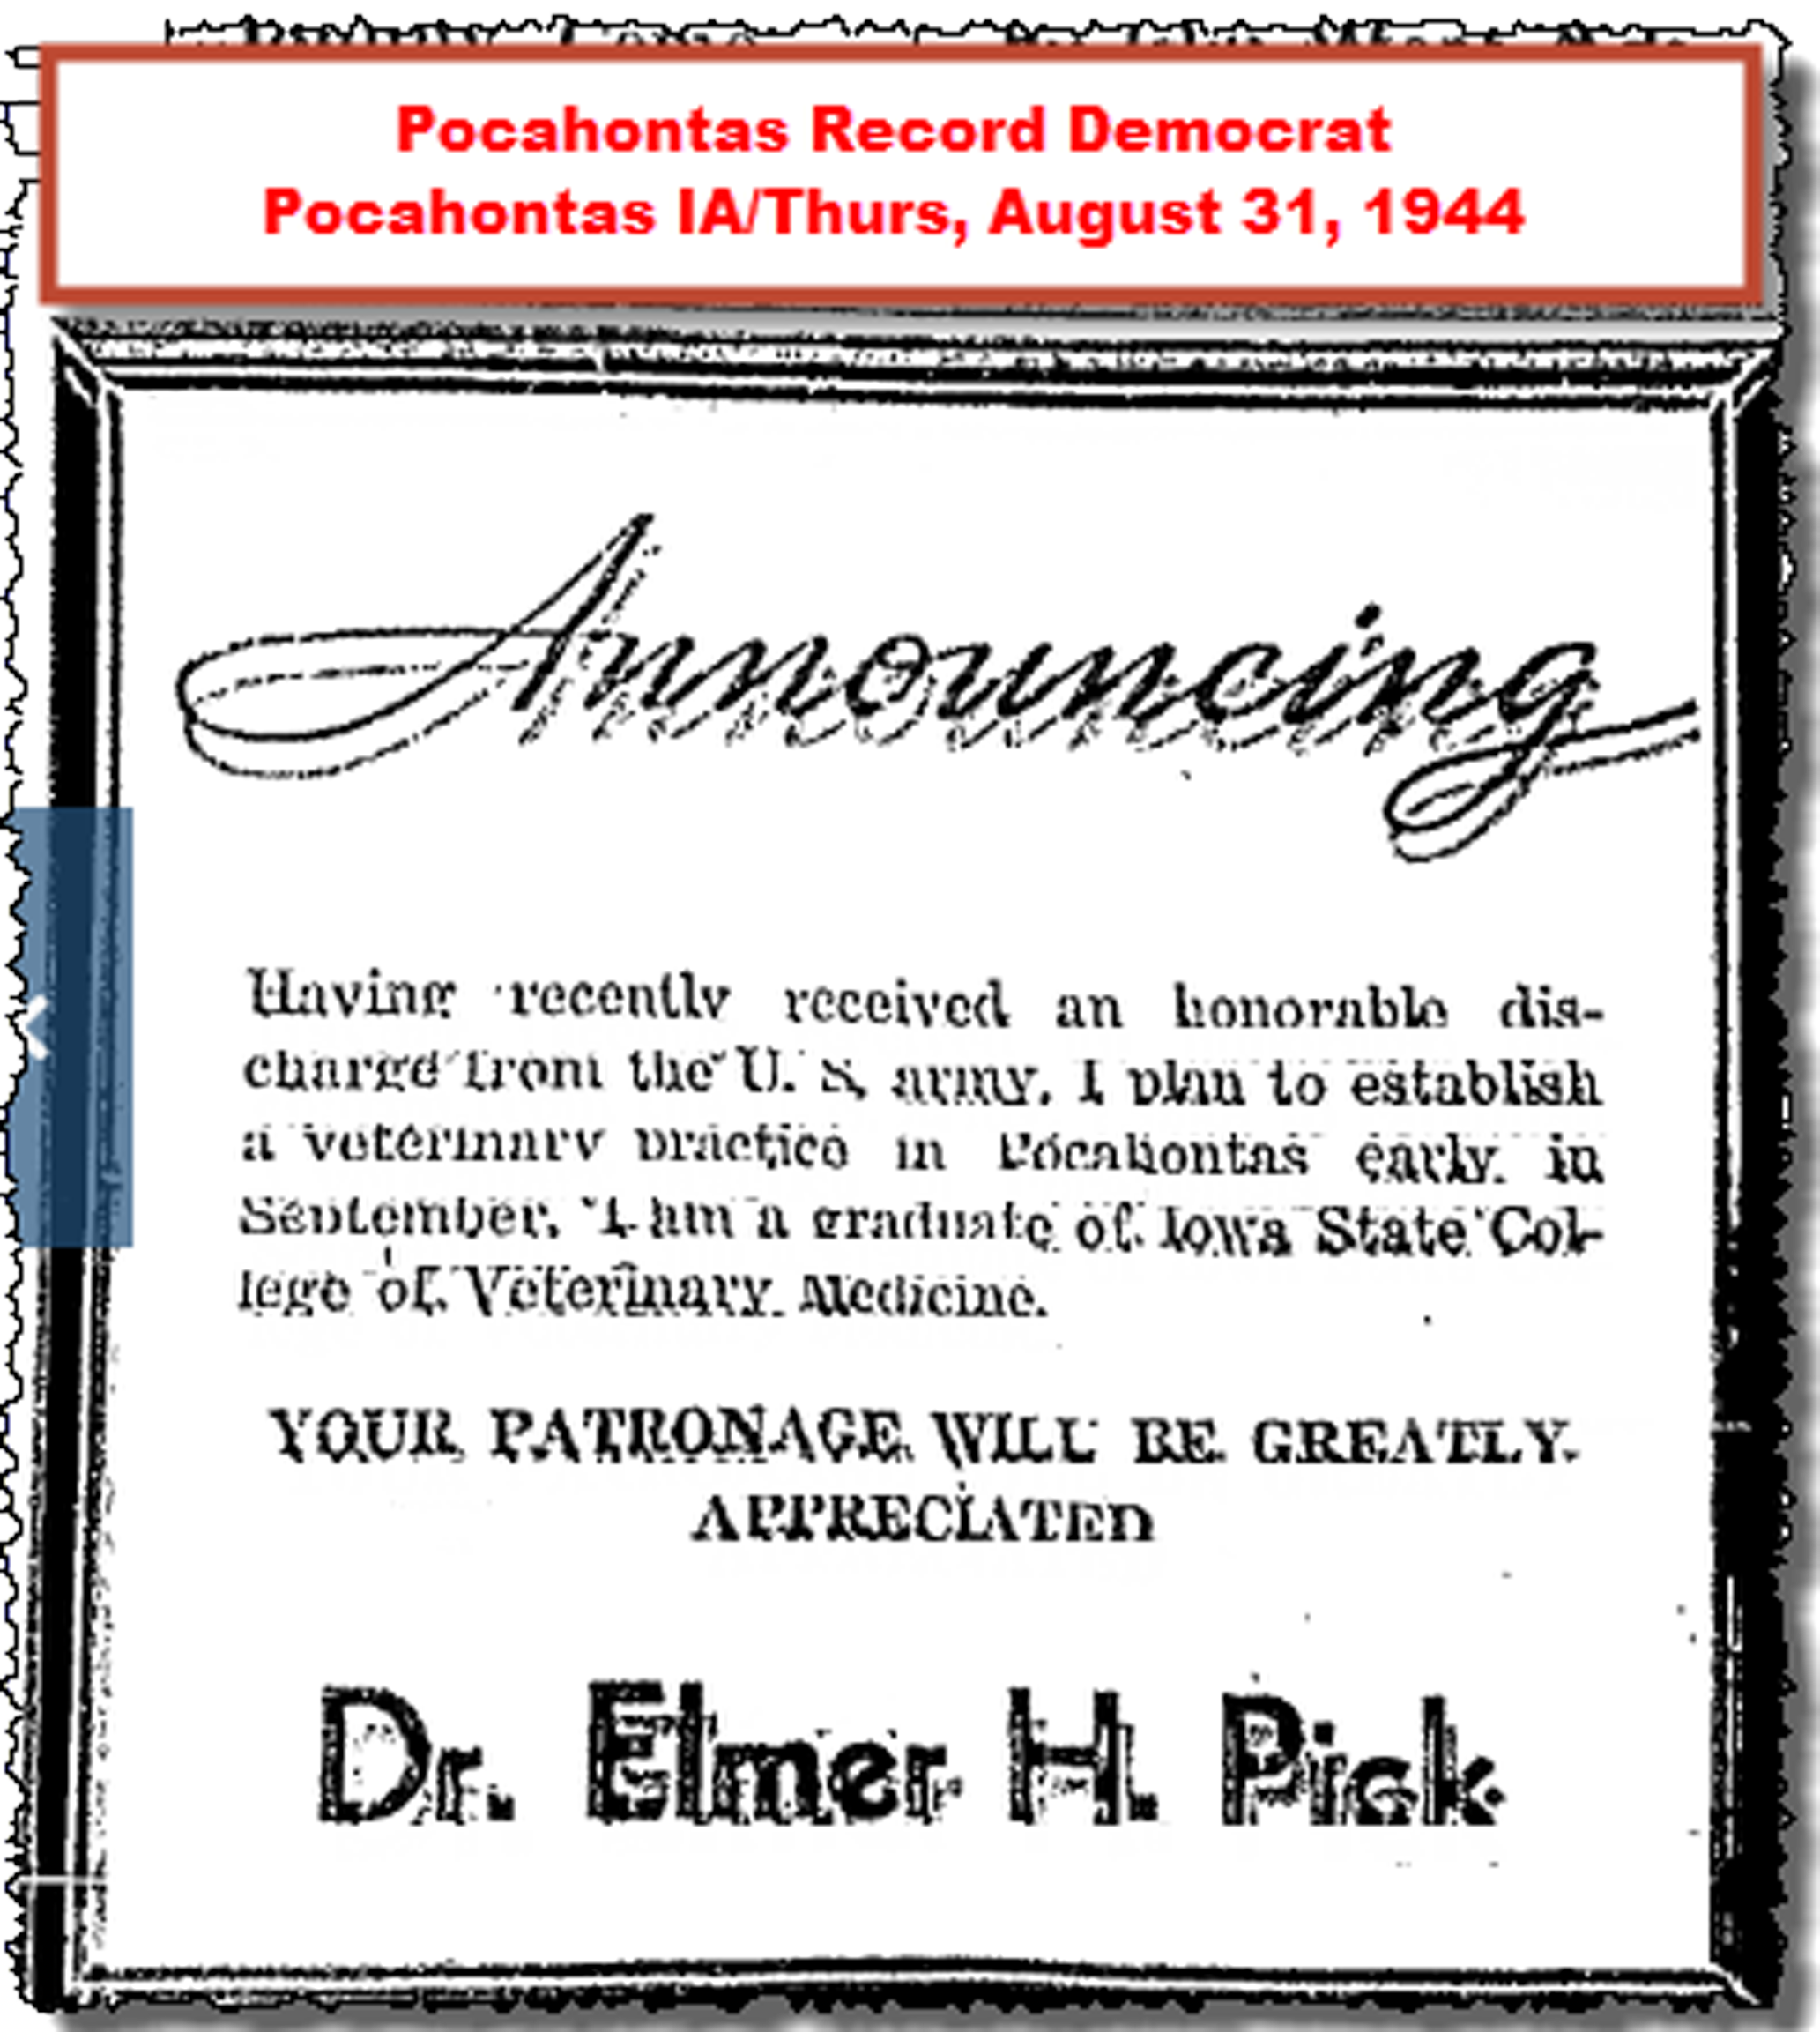 1944 Pick 22 EH open vet practice Pocahontas IA Aug 31.png